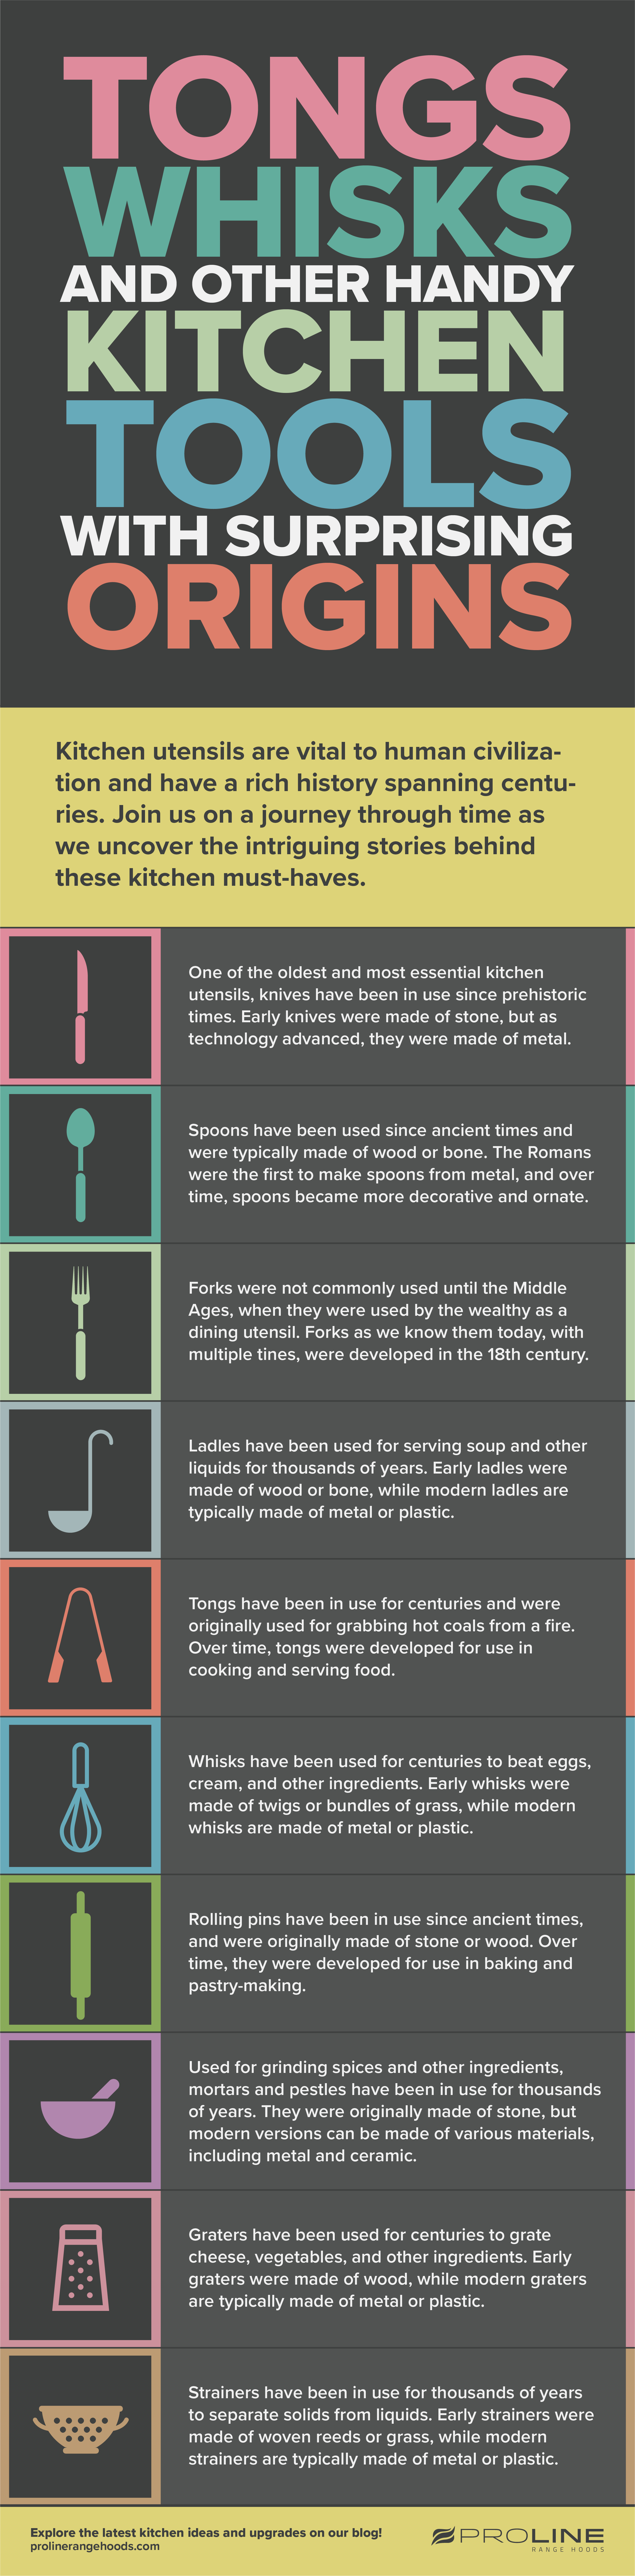 Surprising Origins of common kitchen utensils